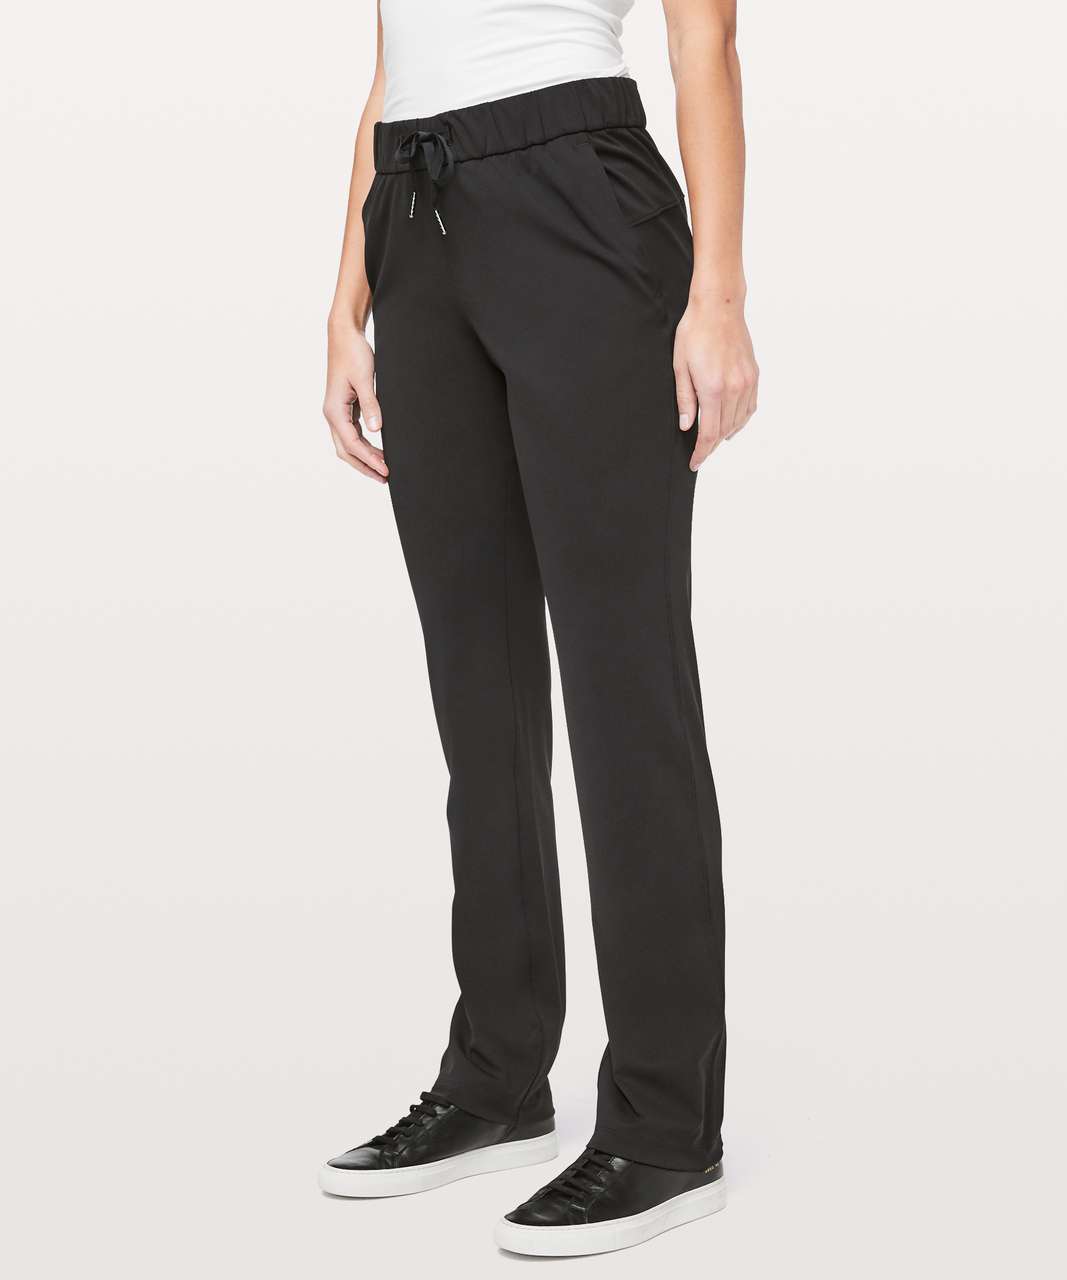 Lululemon black leggings size 2 or 4 see measurements - $33